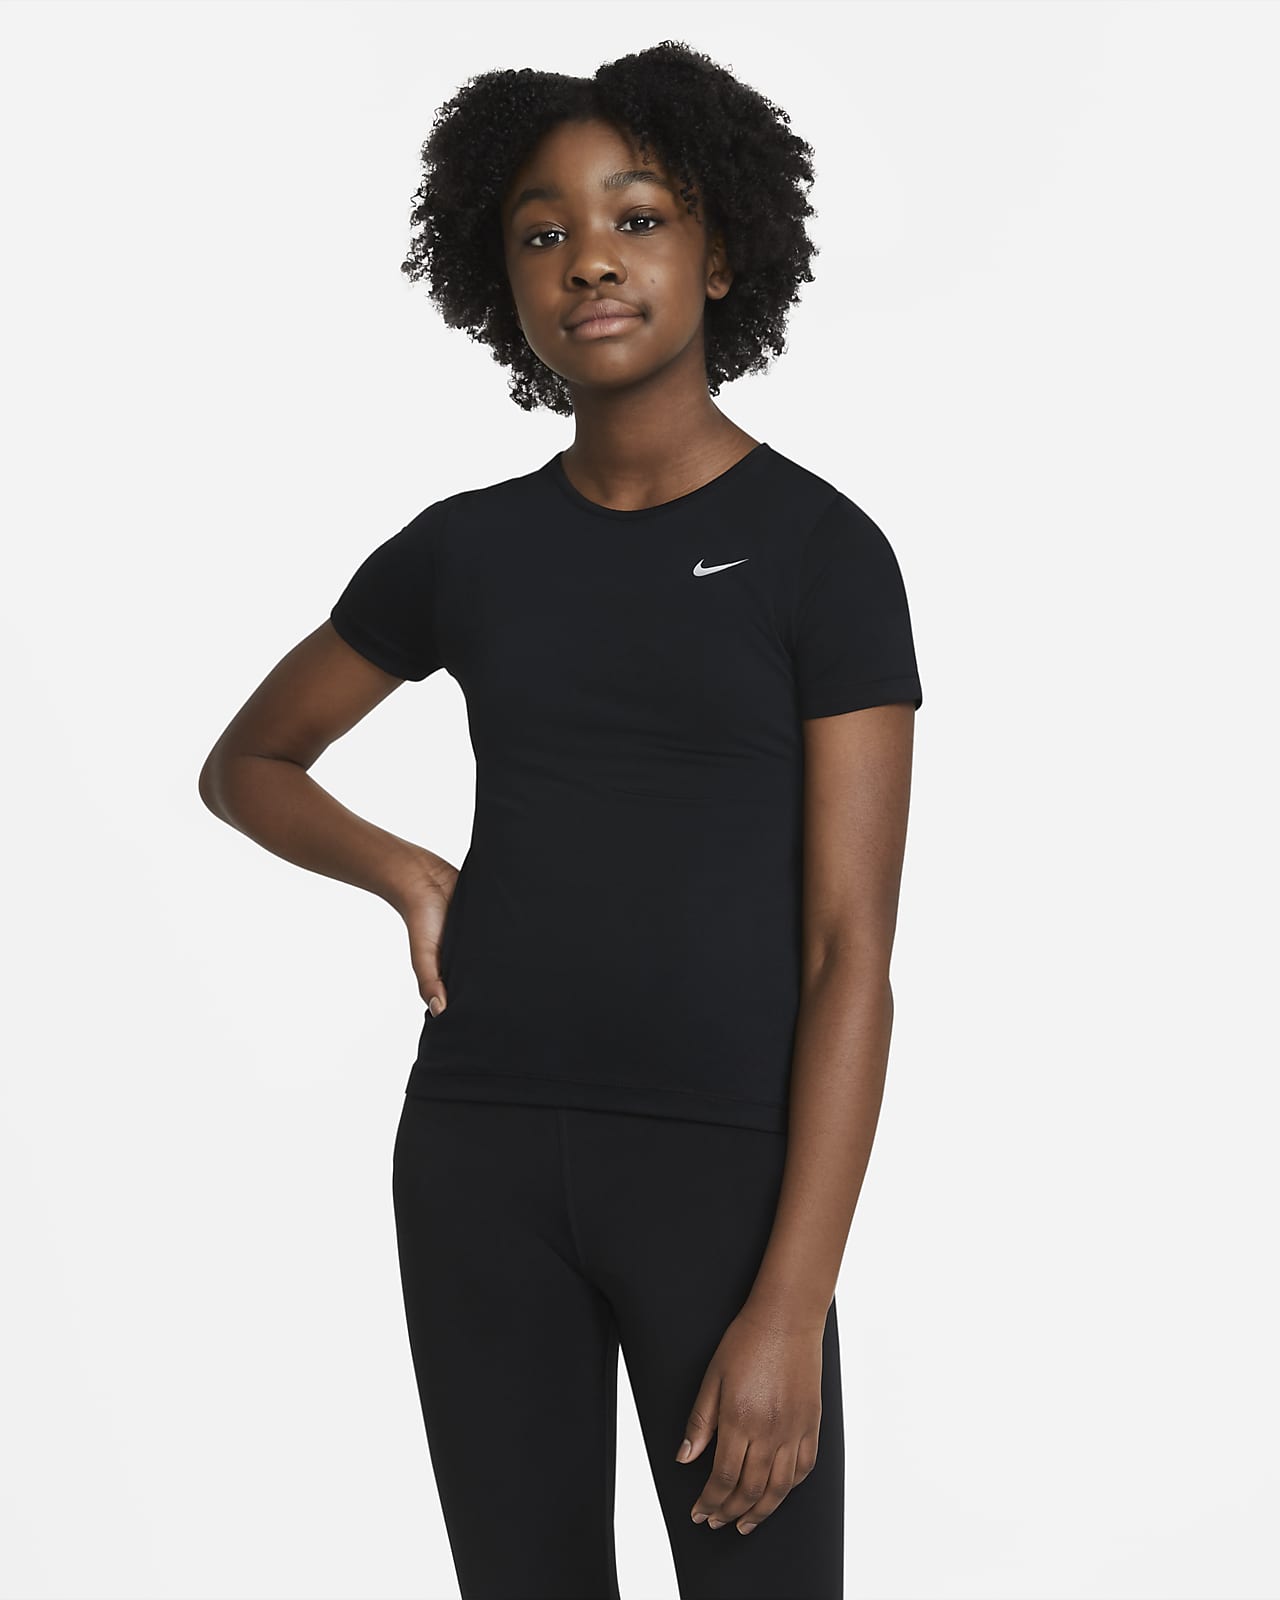 Nike Pro Older Kids' (Girls') Short-Sleeve Top